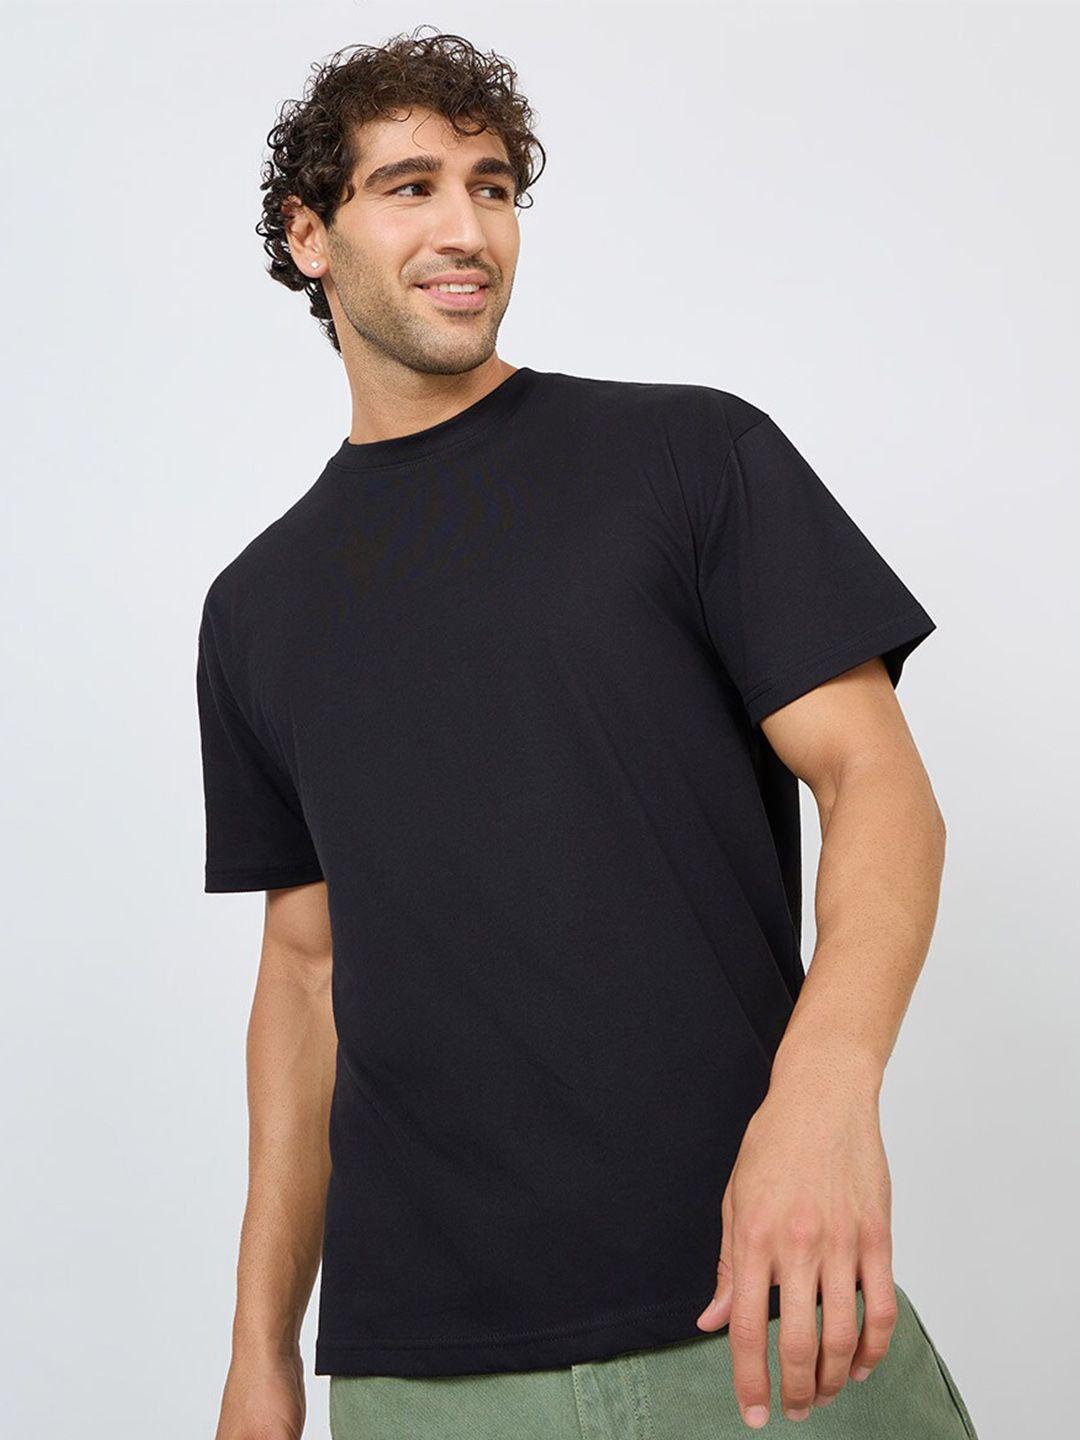 styli men black extended sleeves monochrome raw edge t-shirt